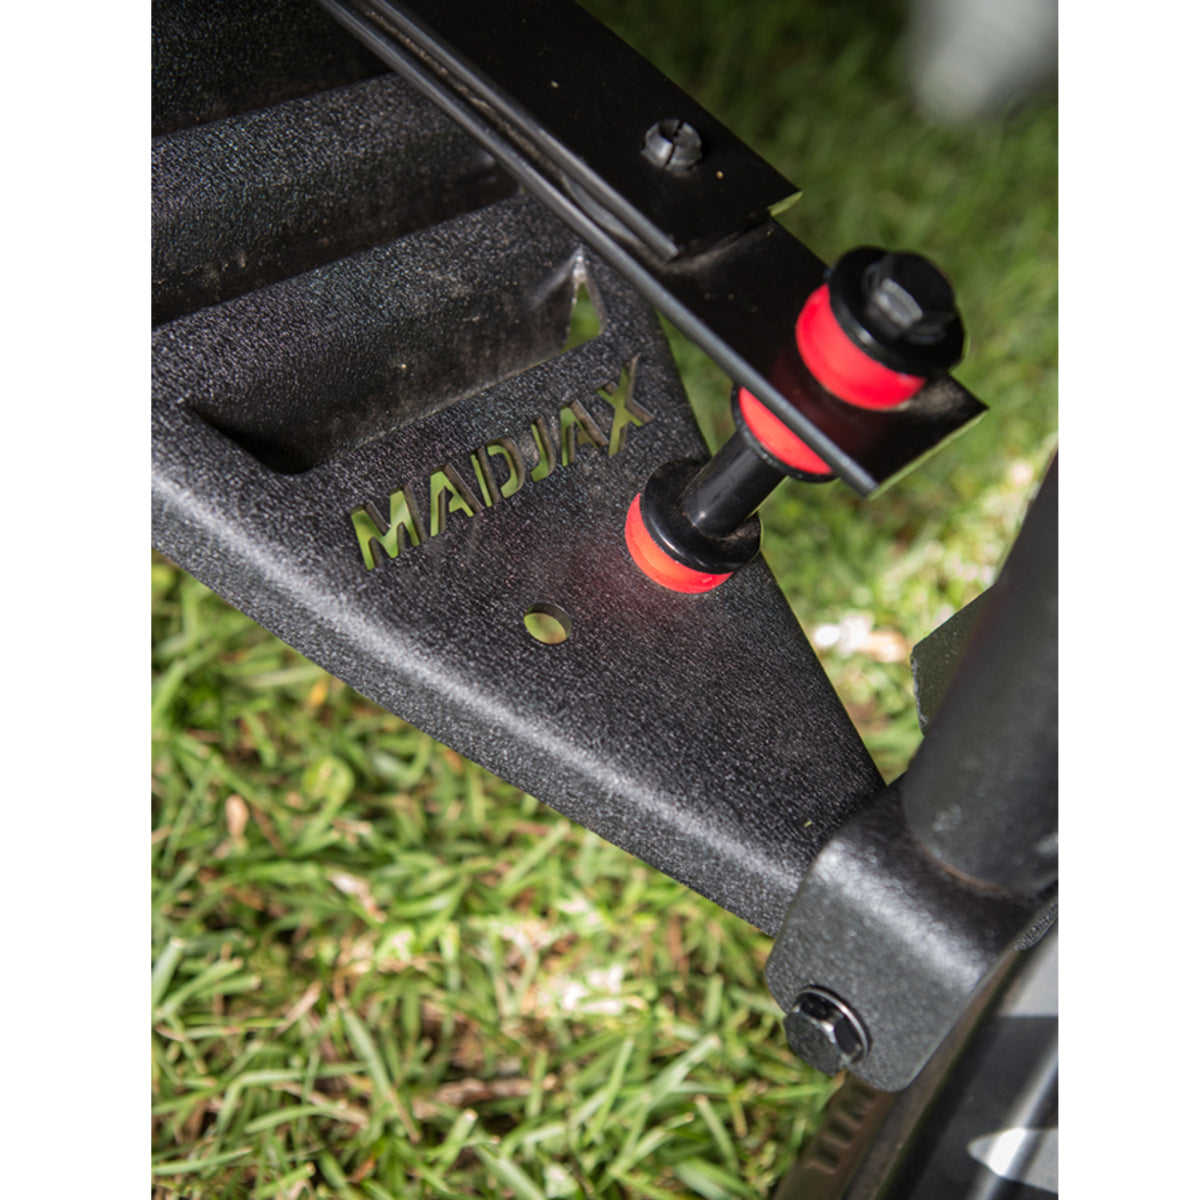 MadJax King 6" XD Lift Kit for Club Car Precedent / Onward / Tempo